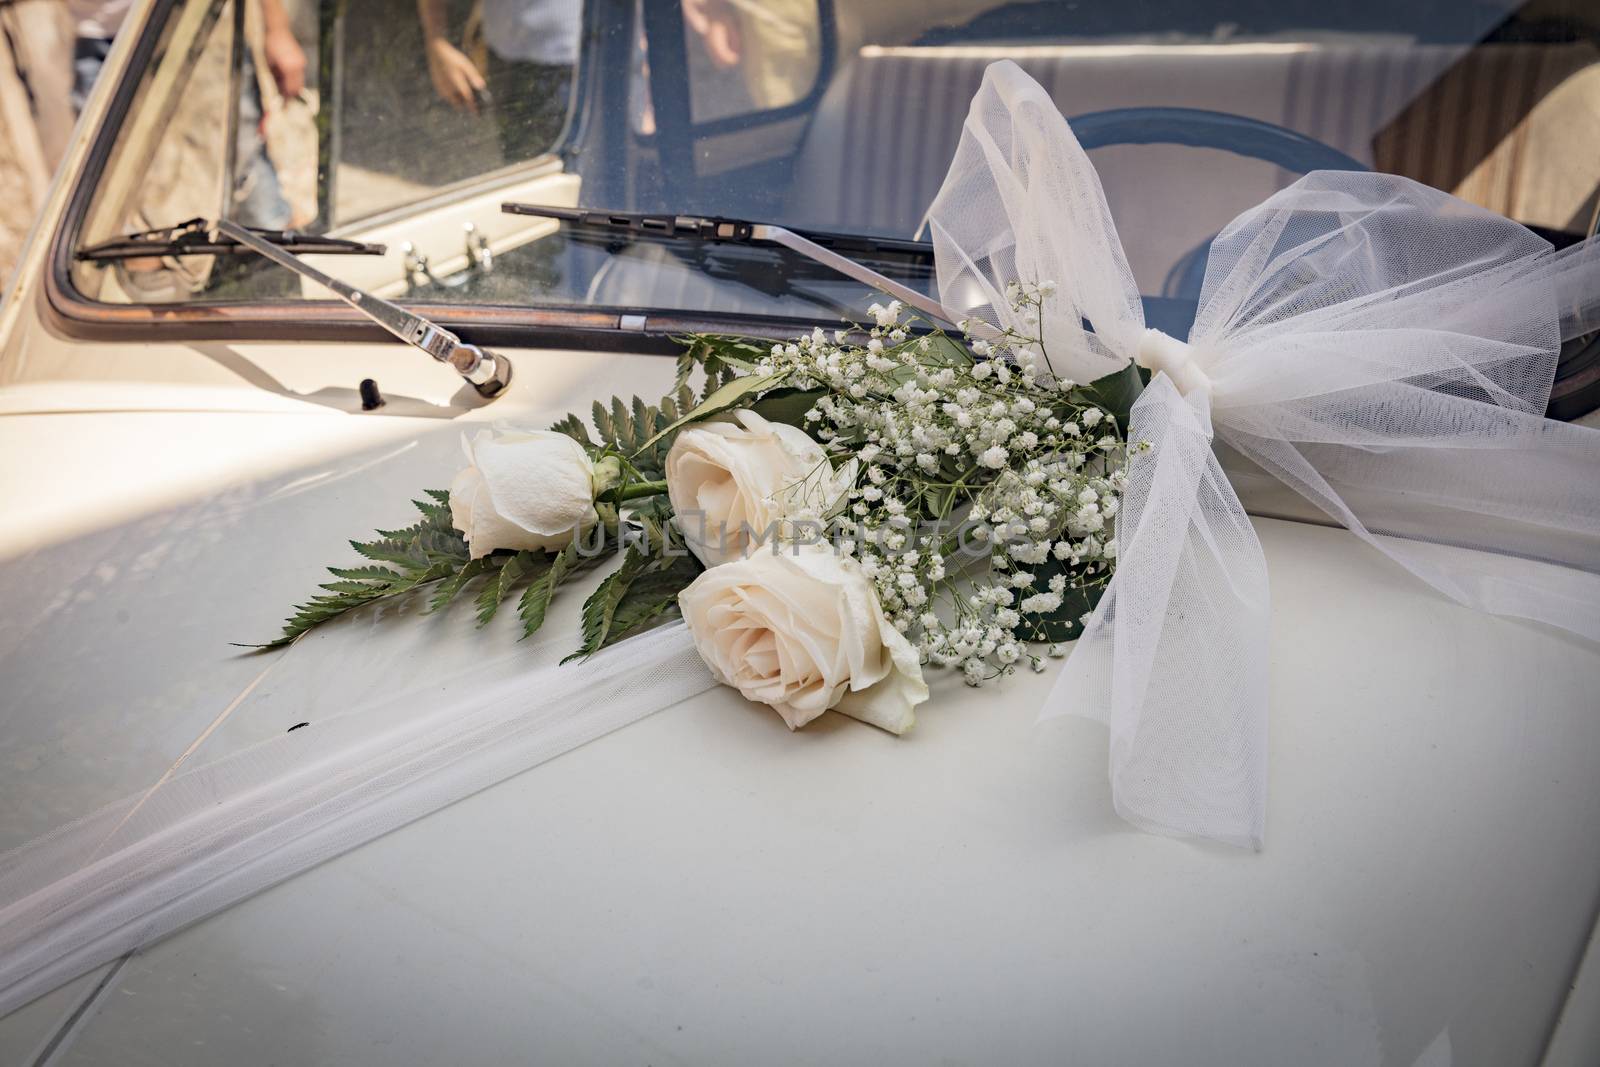 Malcesine, Lake Garda, Italy, August 2019, some wedding flowers on a Fiat 500 bonnet